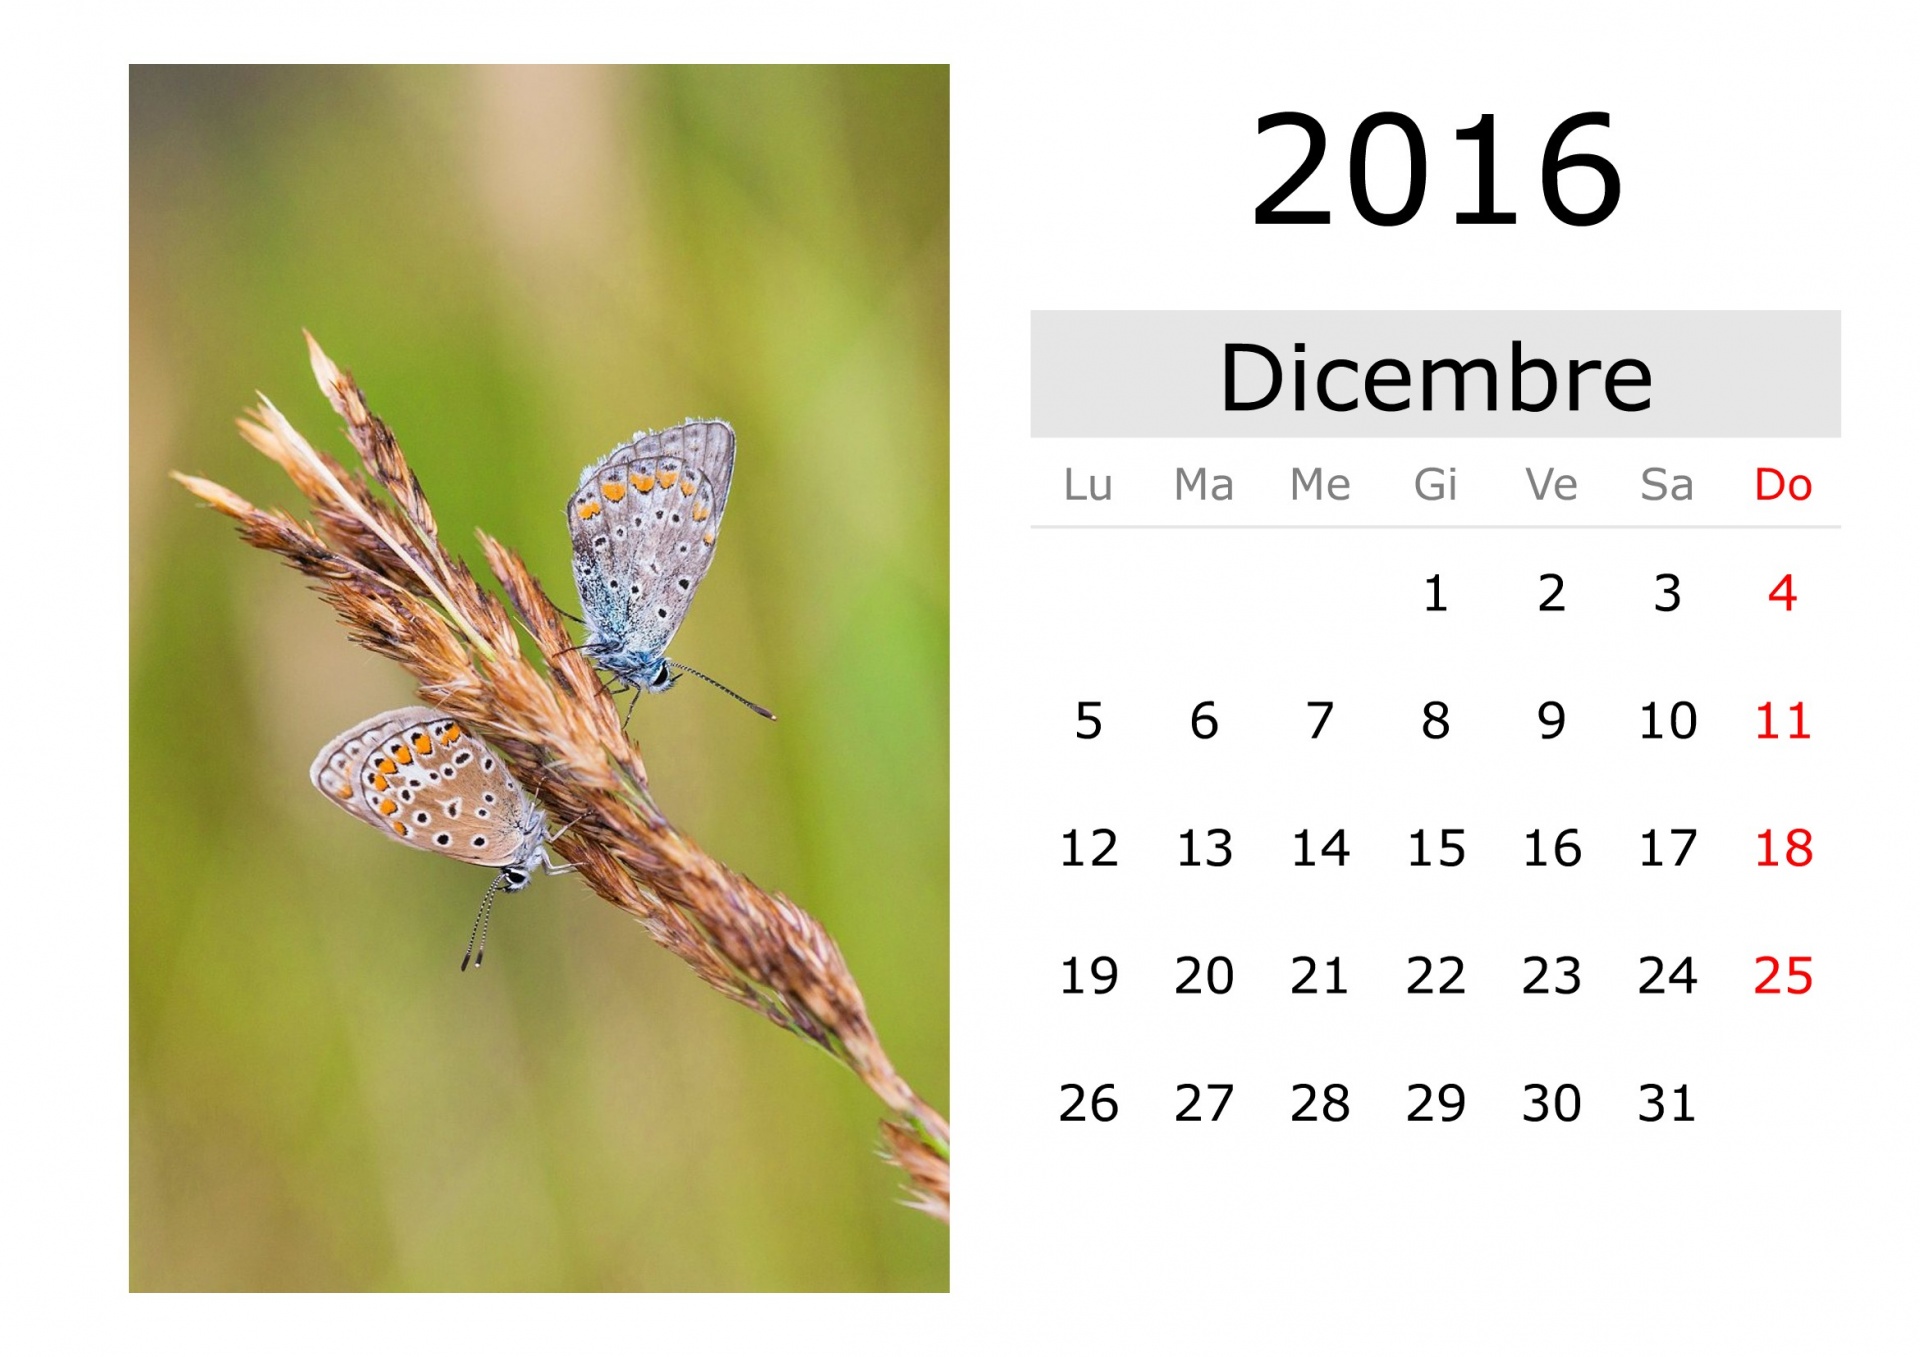 Calendar - December 2016 (Italian)